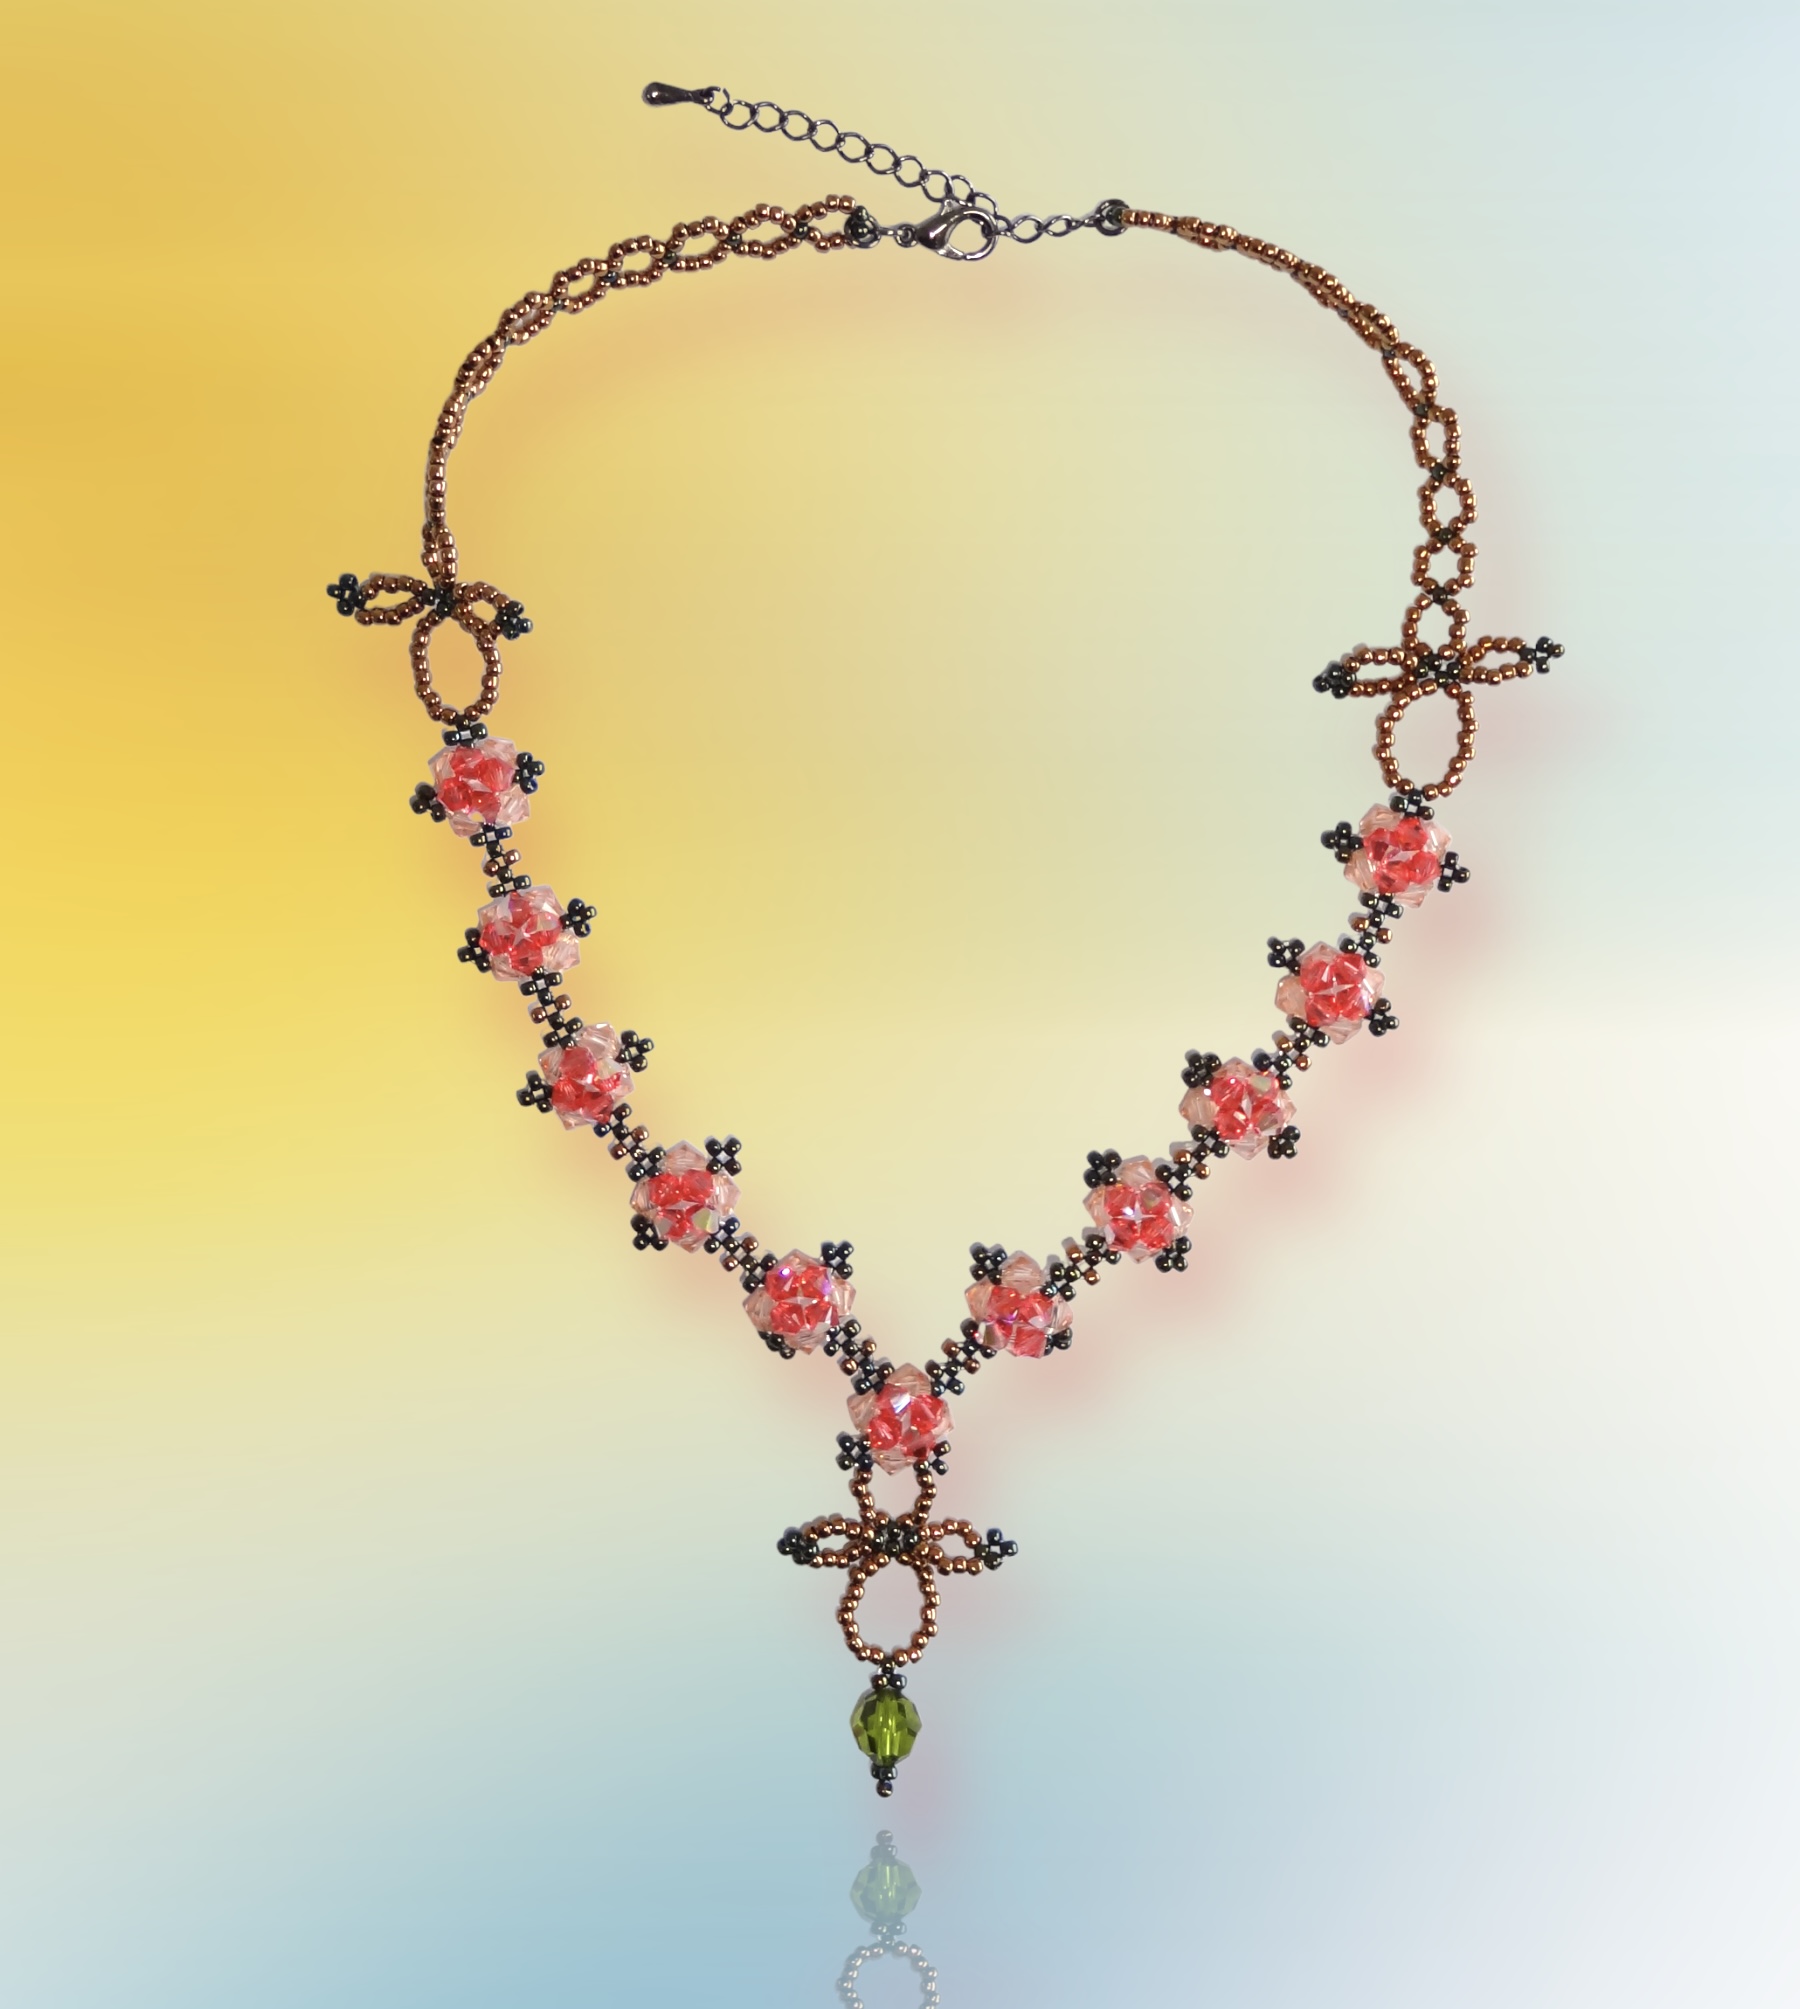 Rose swarovski beads necklace